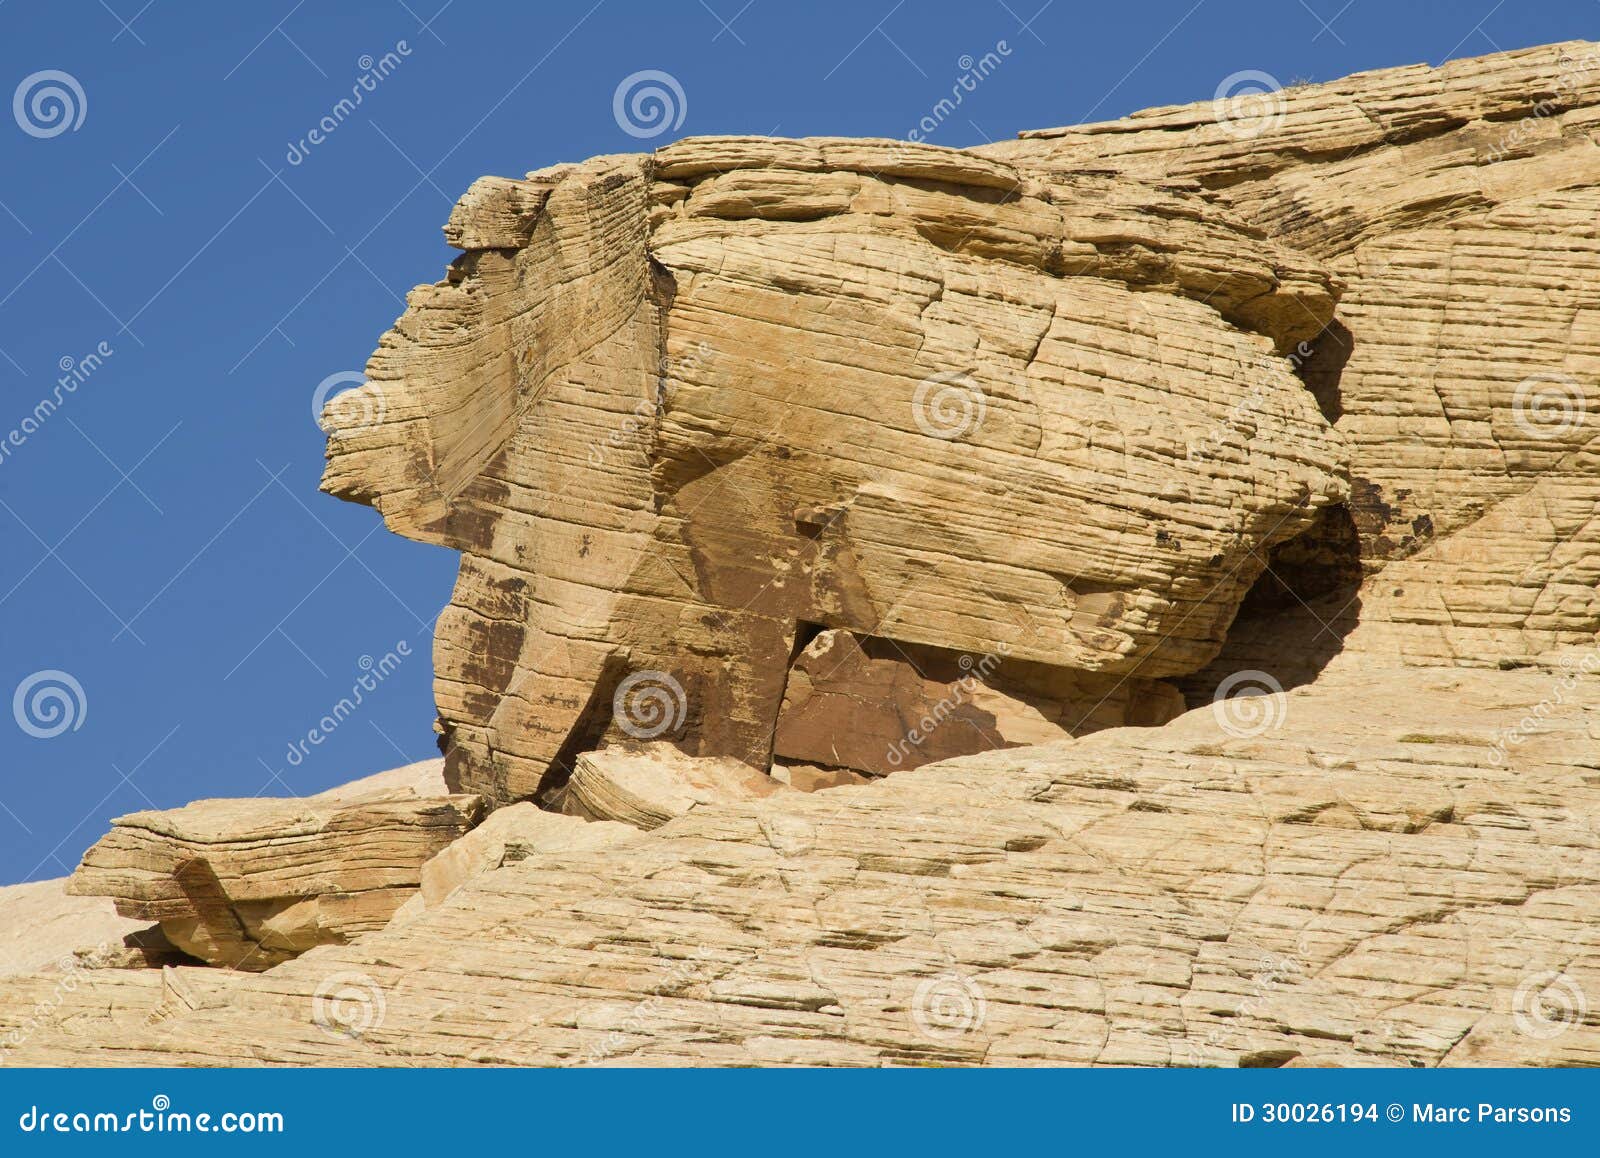 rabbit-shaped-rock-formation-red-rock-canyon-nevada-30026194.jpg